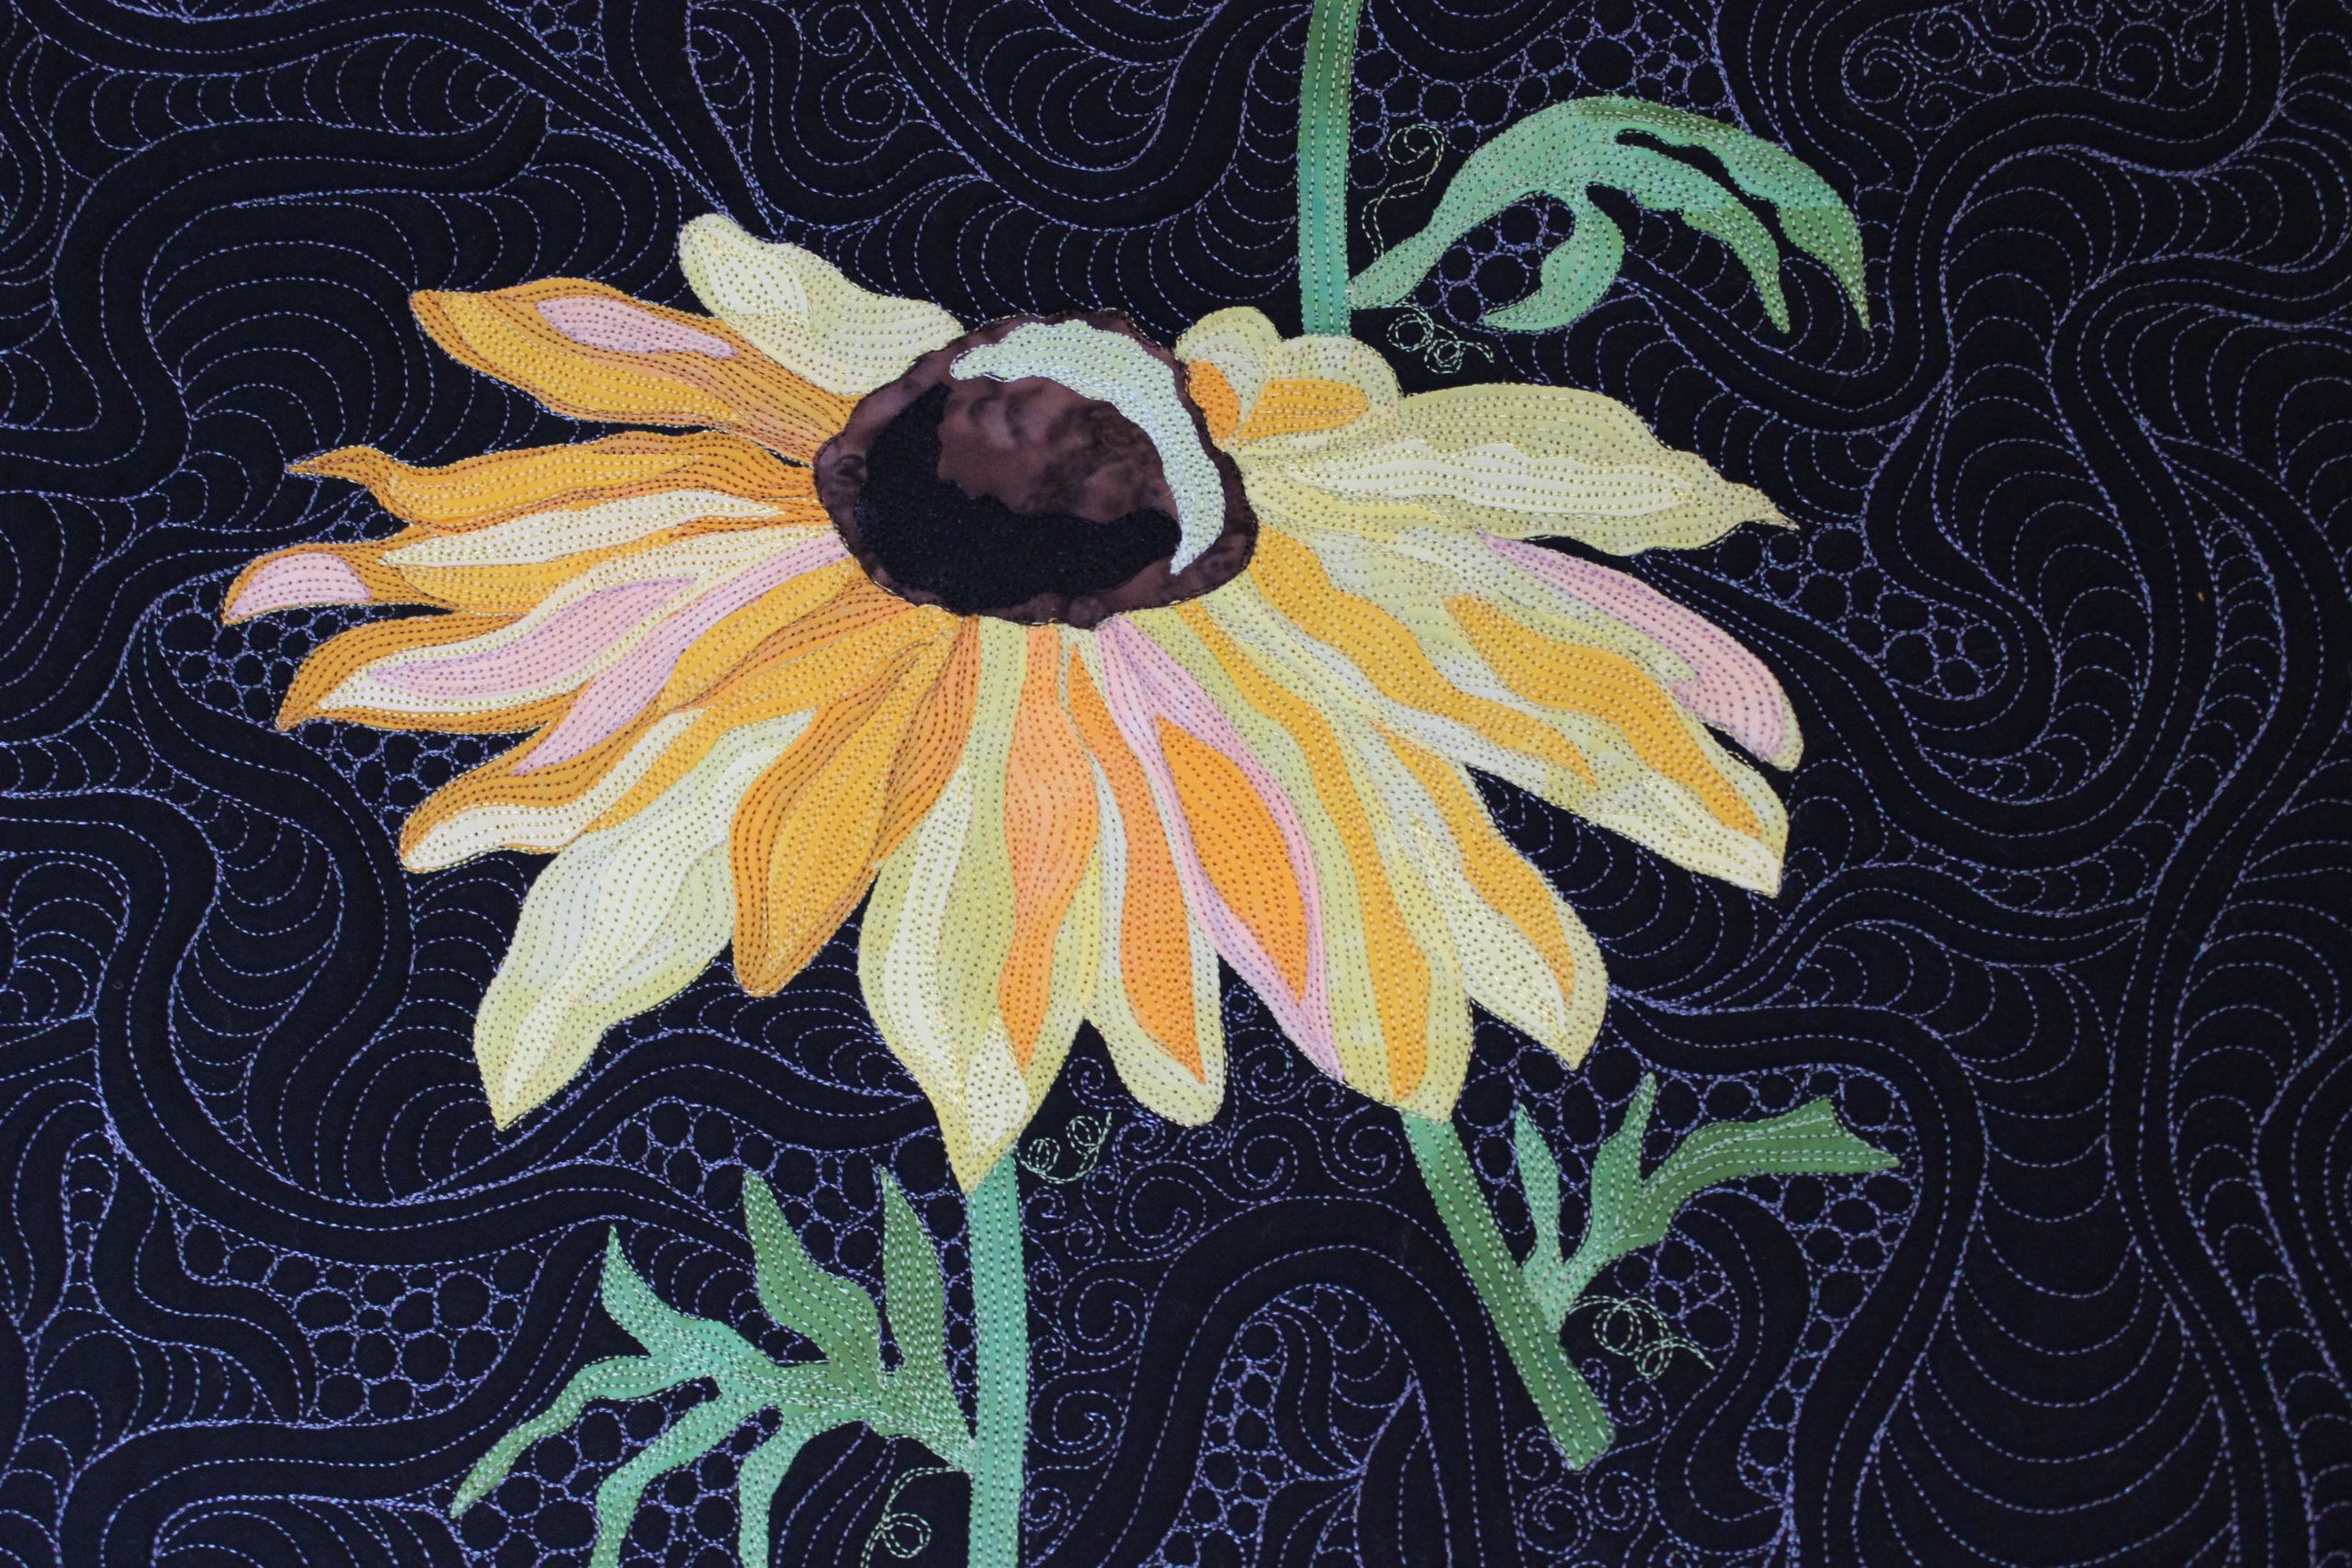 Quilt depicting the flower Rudbeckia hirta (Black-eyed susan) on a dark background.